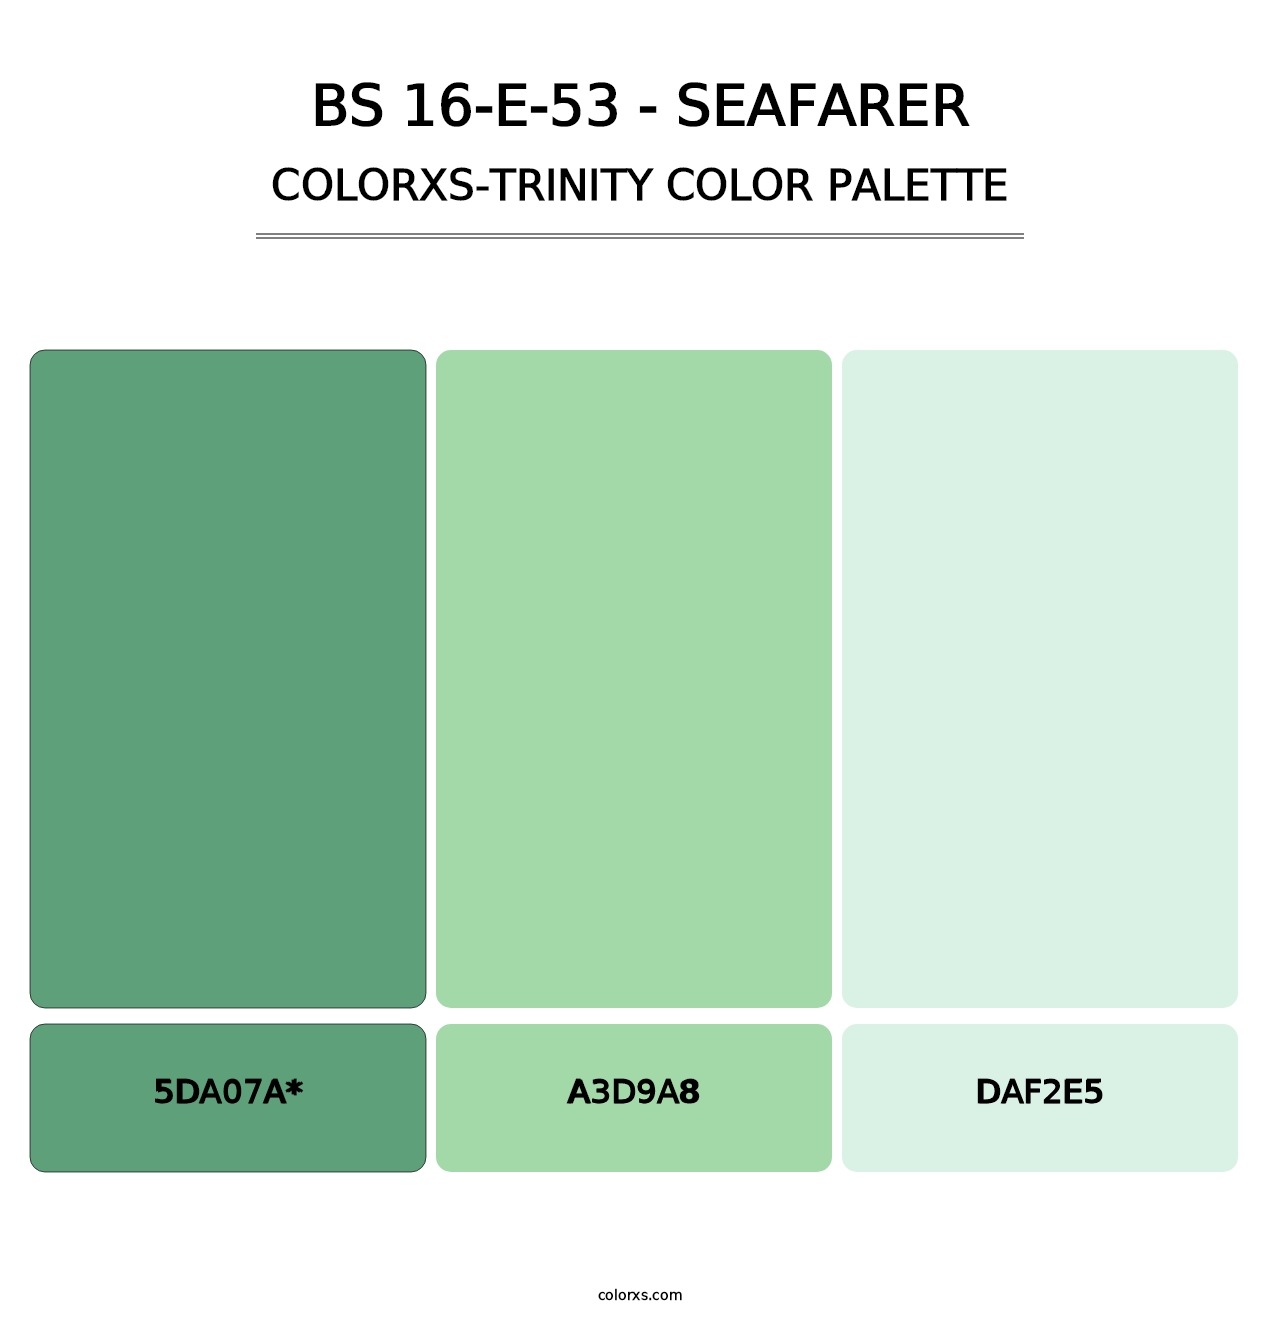 BS 16-E-53 - Seafarer - Colorxs Trinity Palette